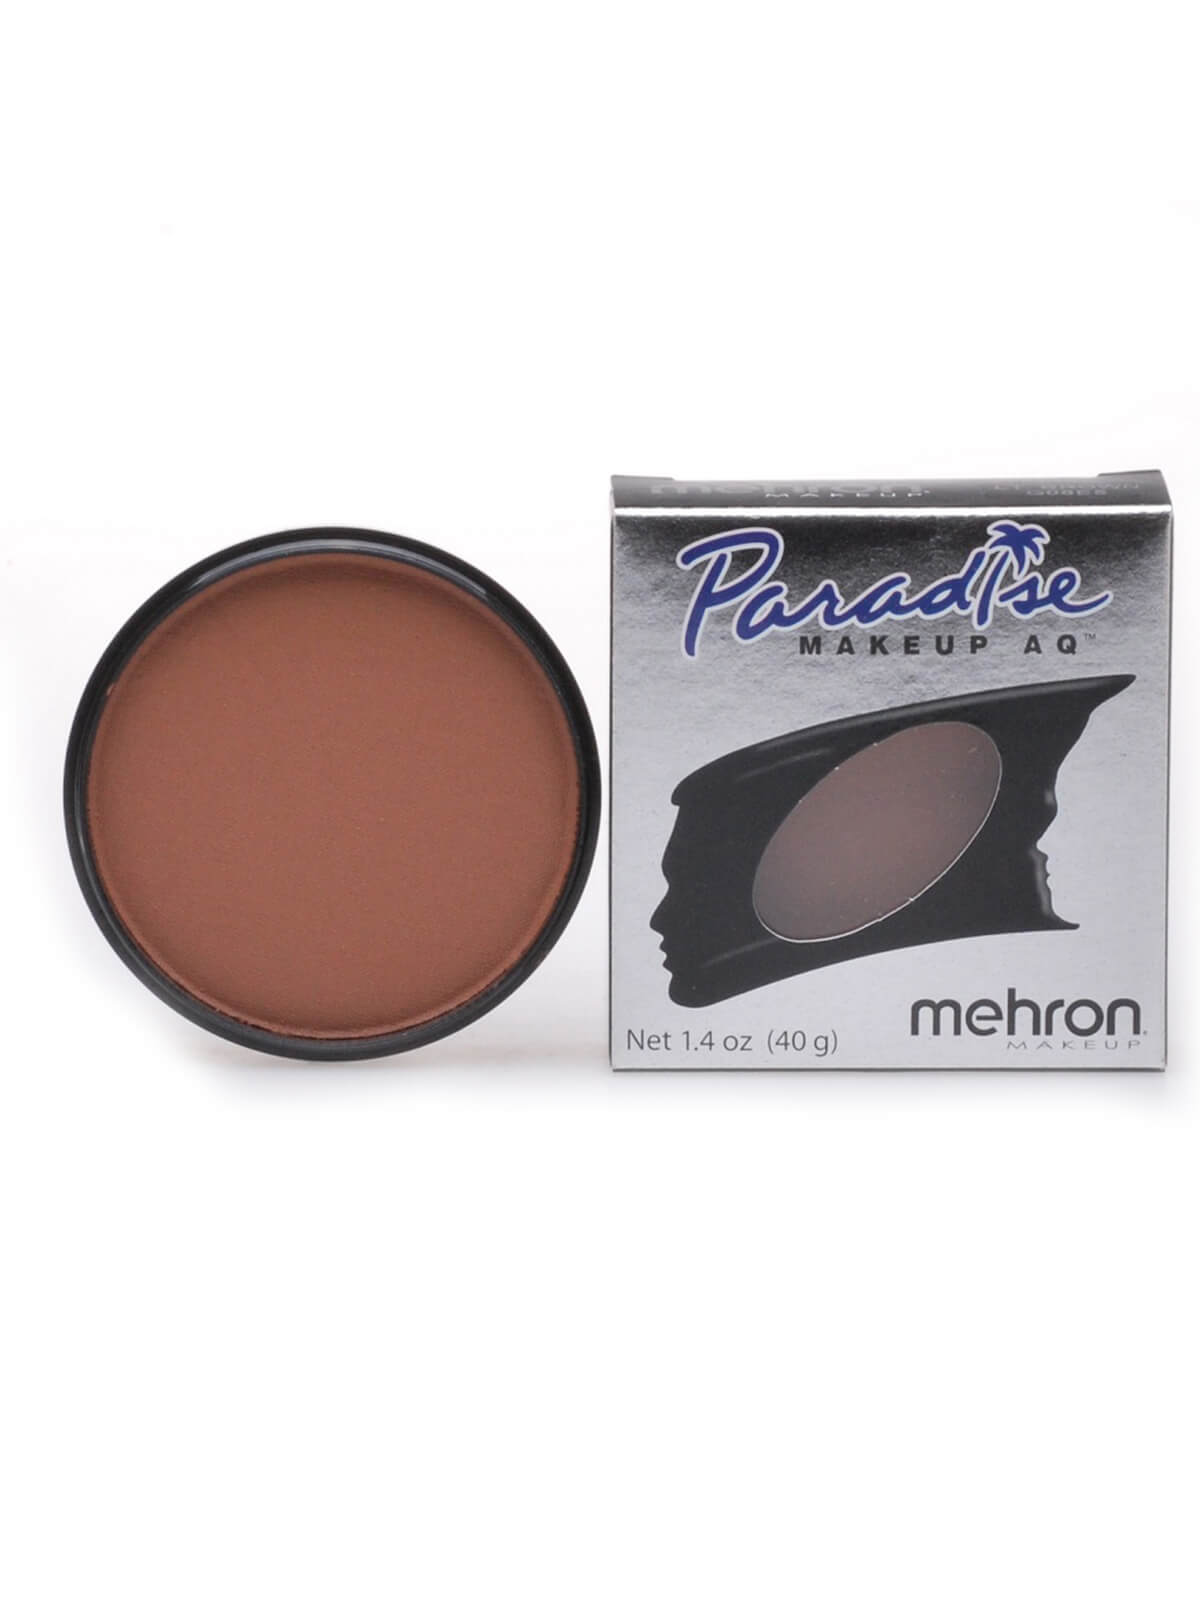 Mehron Paradise Makeup AQ - Pastel - Light Brown